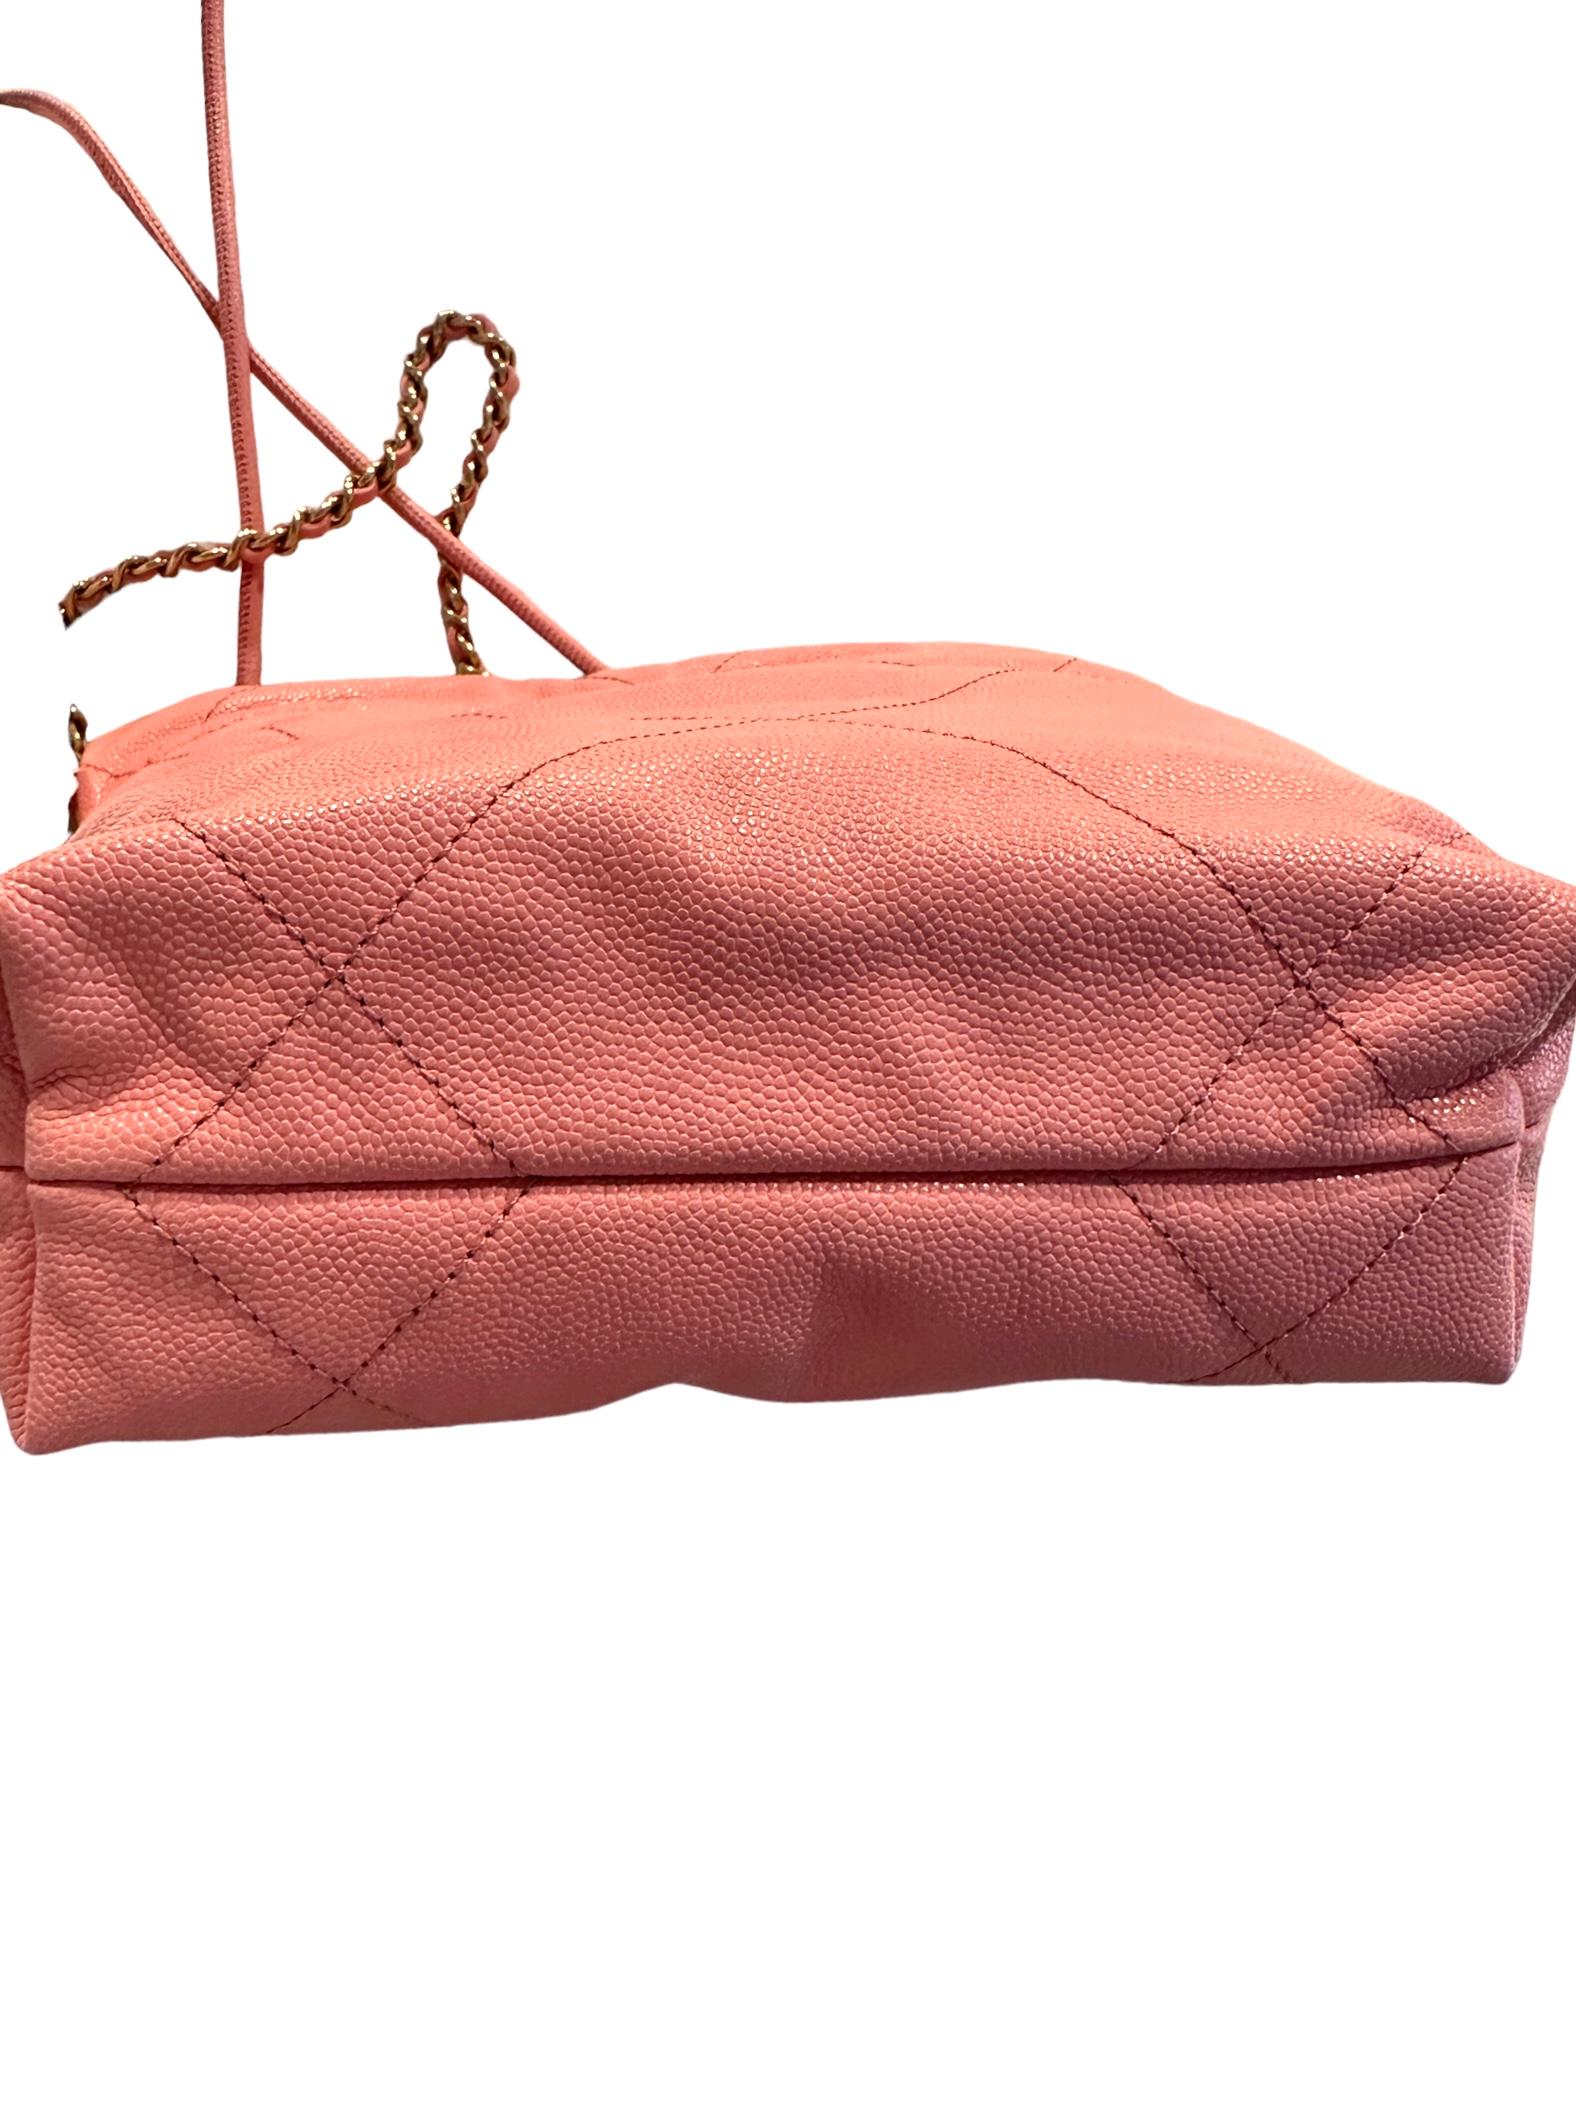 CHANEL 22 Mini Handbag Pink Coral Goldtone NEW For Sale 5